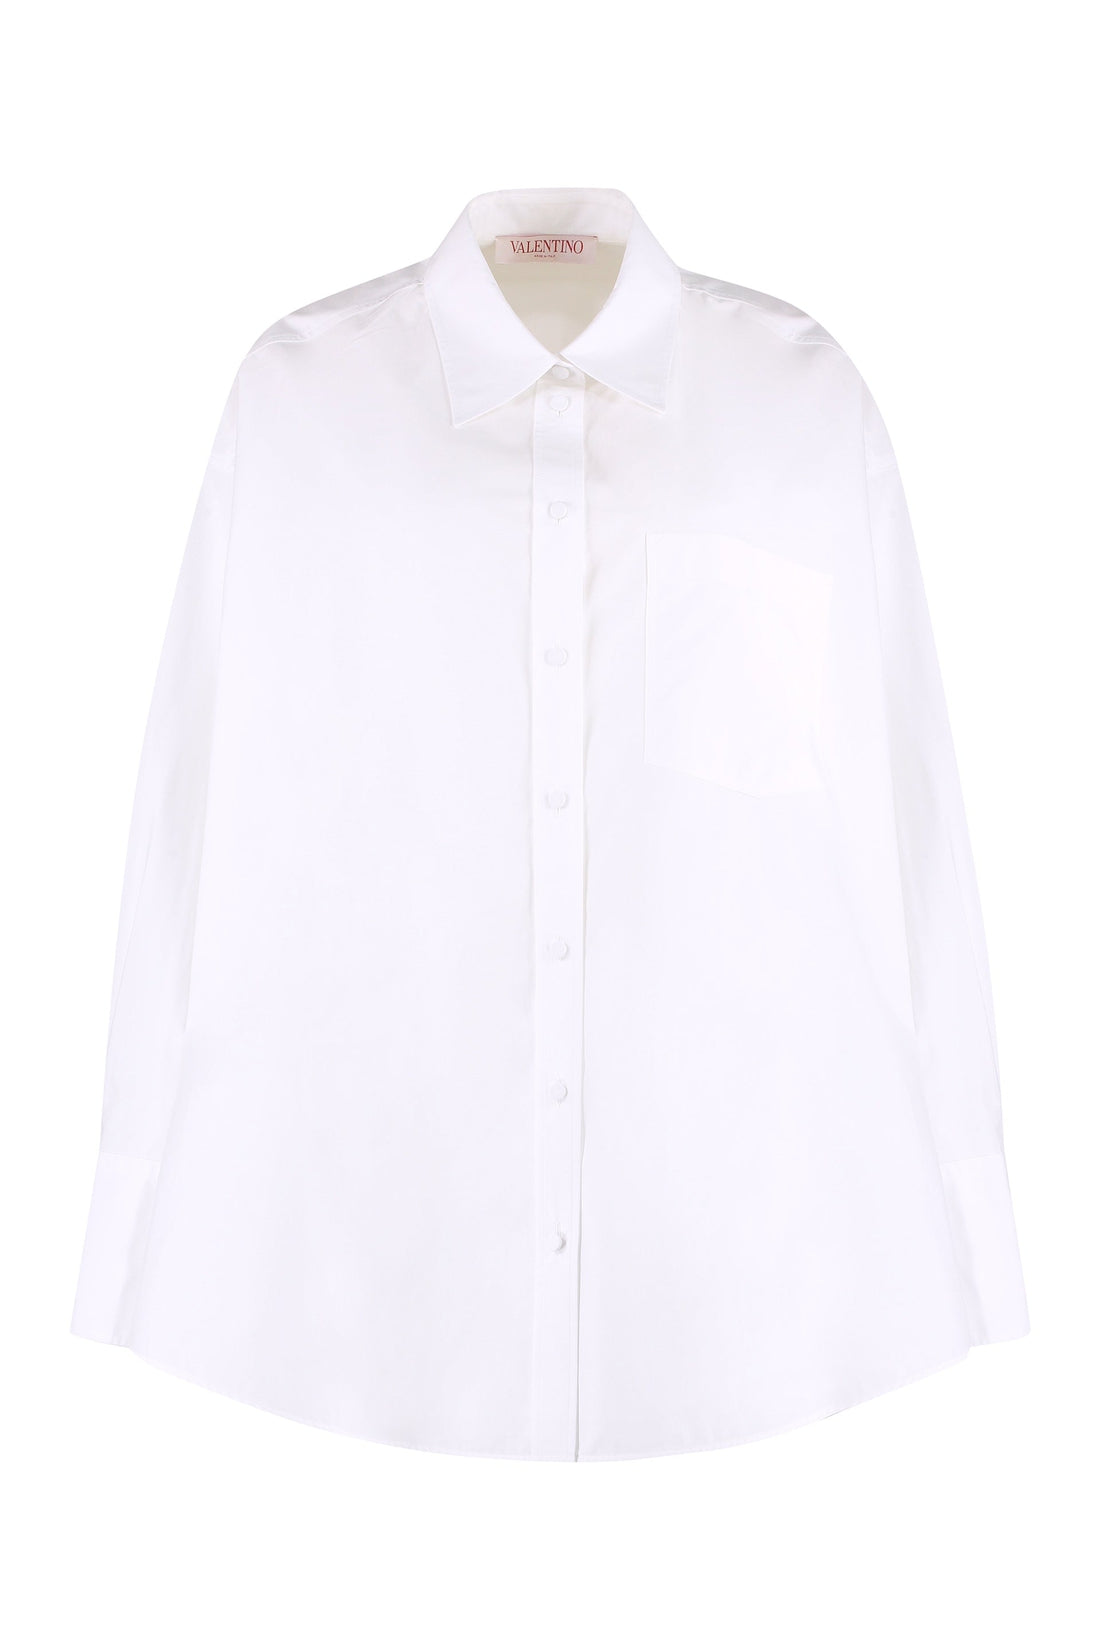 Valentino-OUTLET-SALE-Cotton poplin shirt-ARCHIVIST